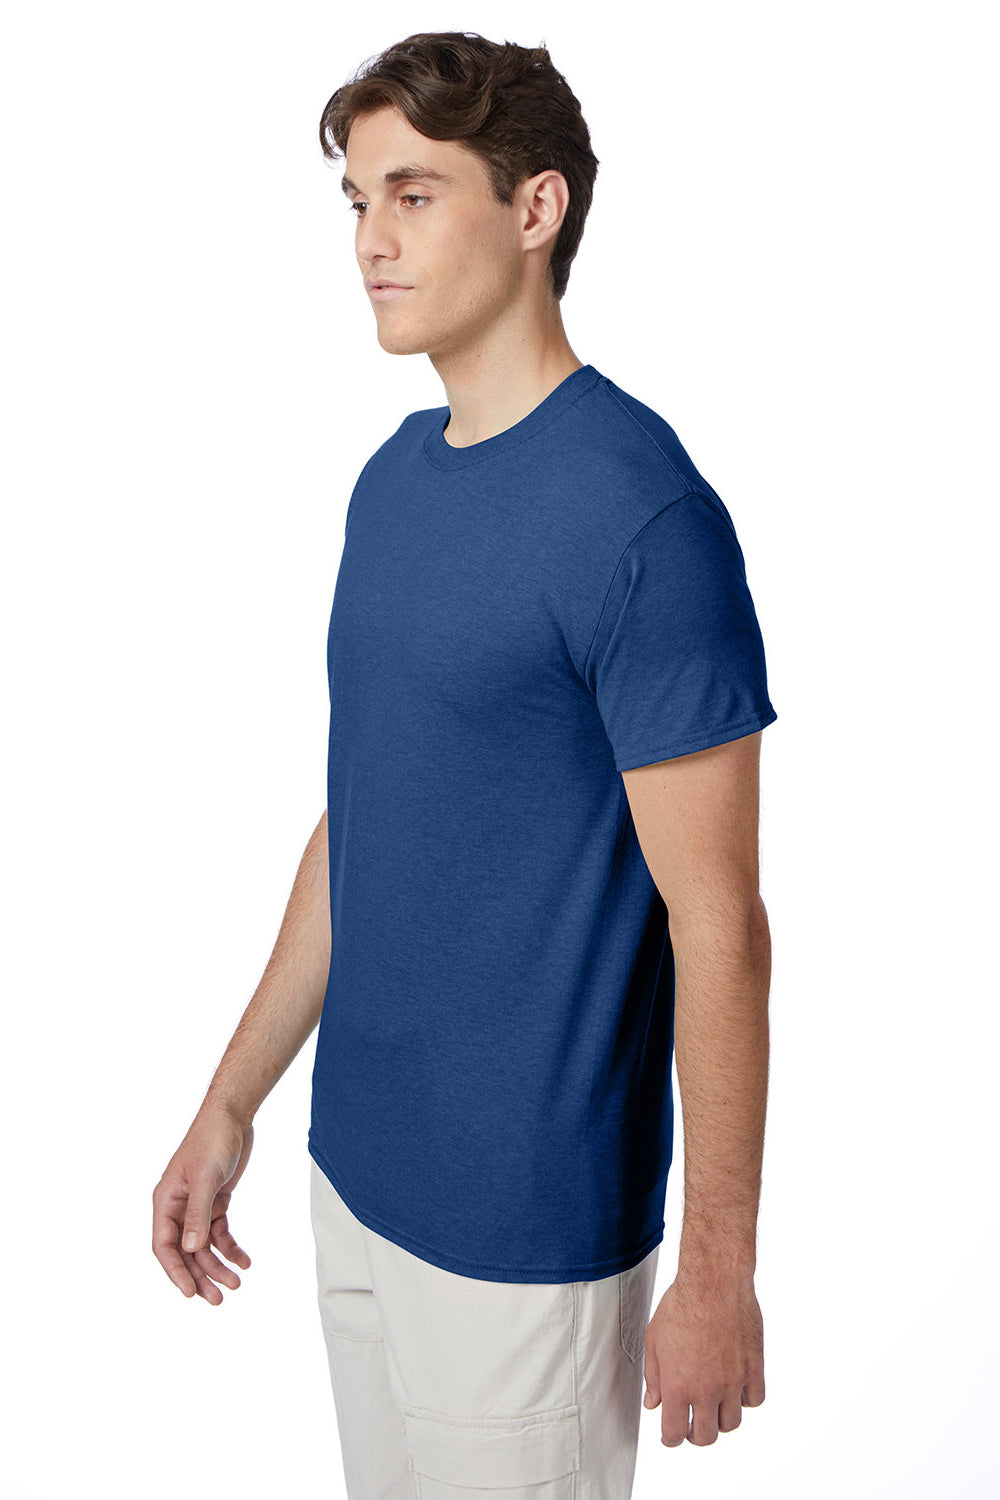 Hanes 42TB Mens X-Temp FreshIQ Moisture Wicking Short Sleeve Crewneck T-Shirt Heather Regal Navy Blue 3Q